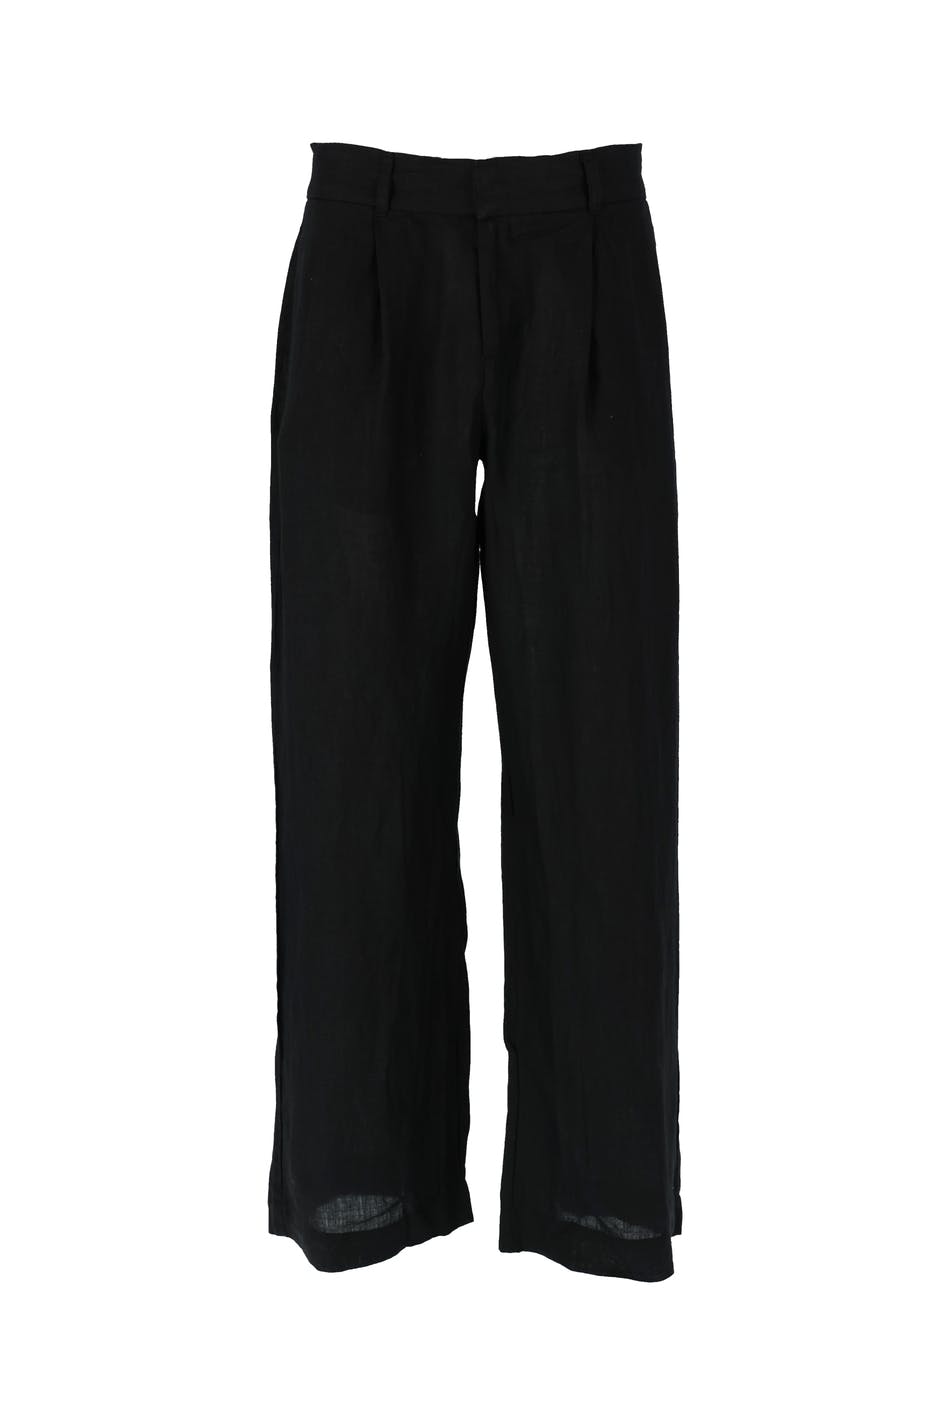 Gina Tricot - Tall linen trousers - linnebyxor - Black - M - Female